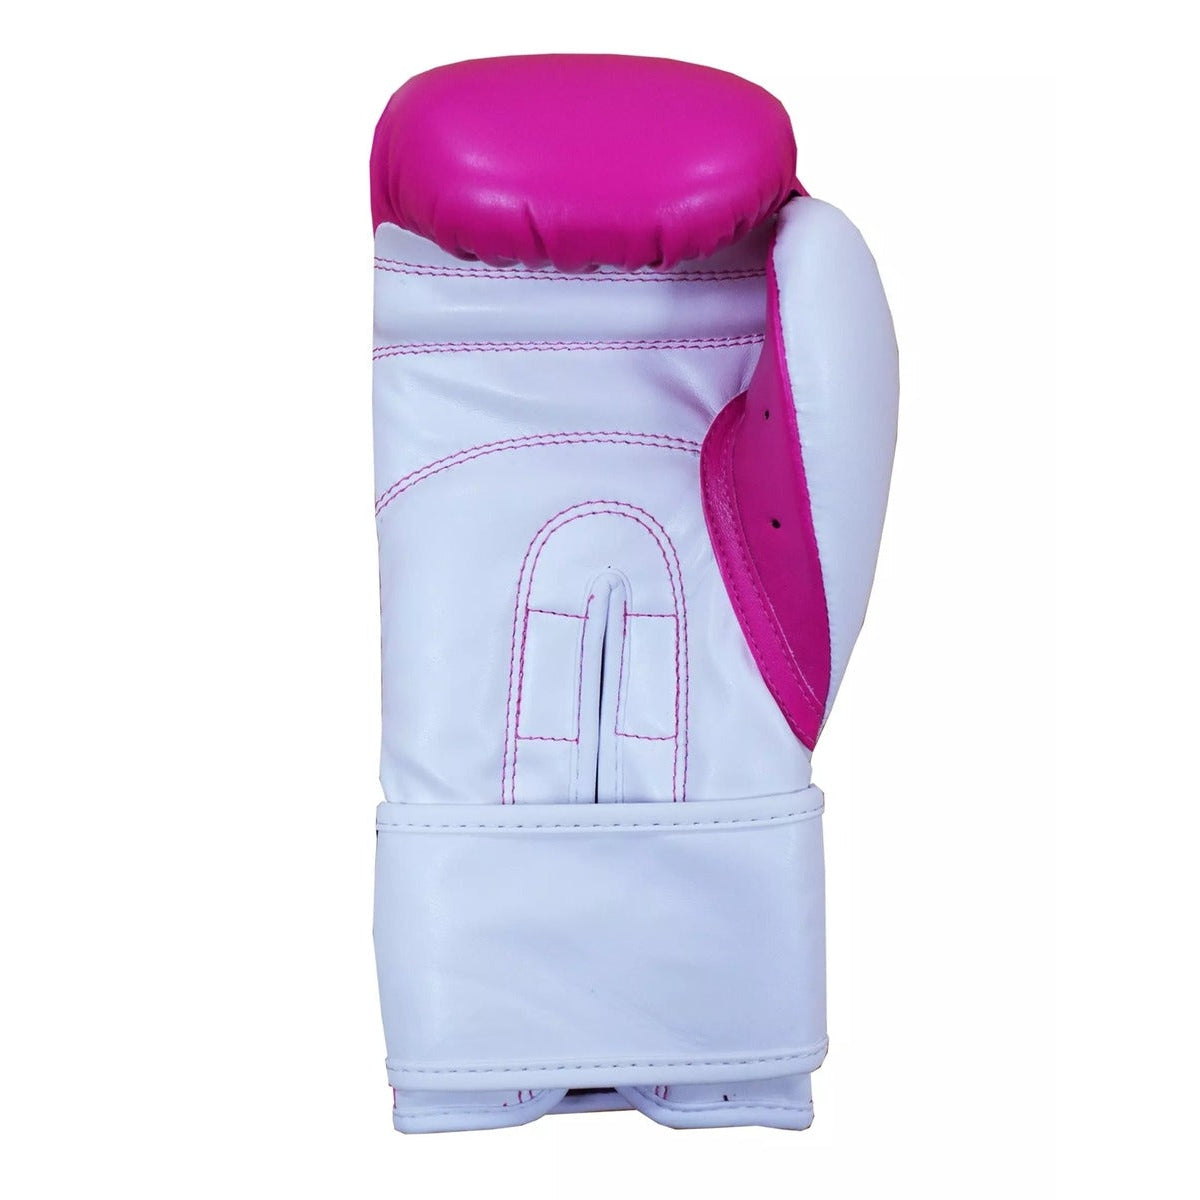 Cimac Ladies Boxing Gloves Pink & White Bag Boxercise